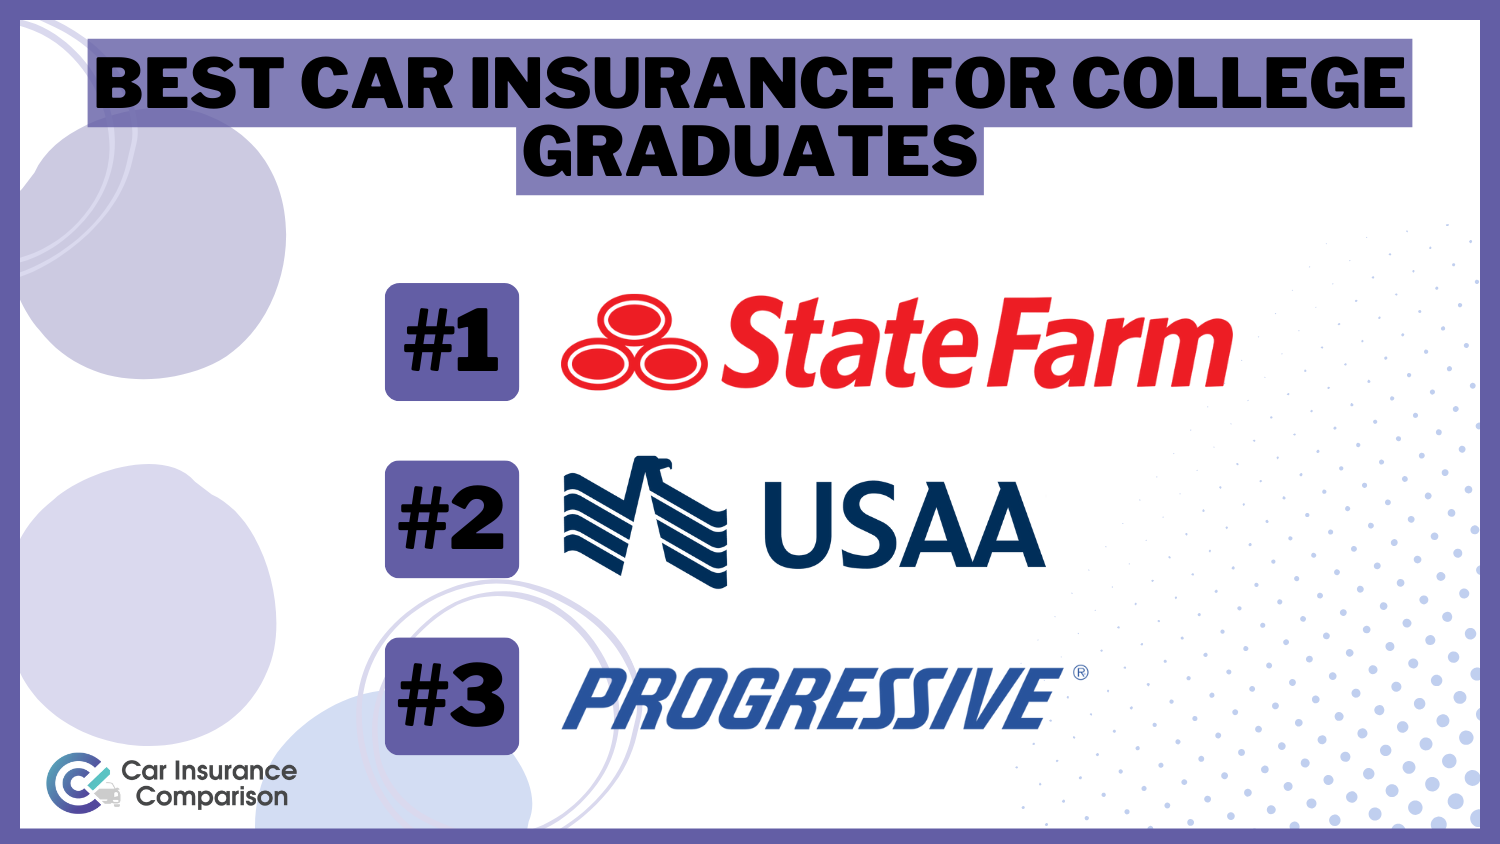 Best Car Insurance for College Graduates : State Farm, USAA, and Progressive